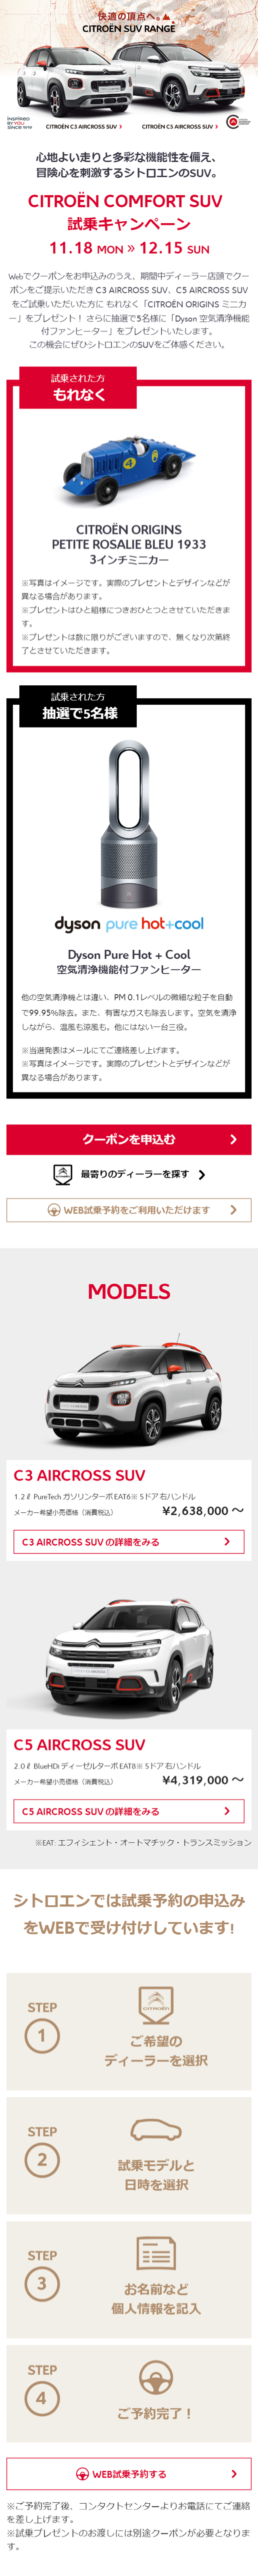 CITROEN COMFORT SUV試乗キャンペーン_sp_1